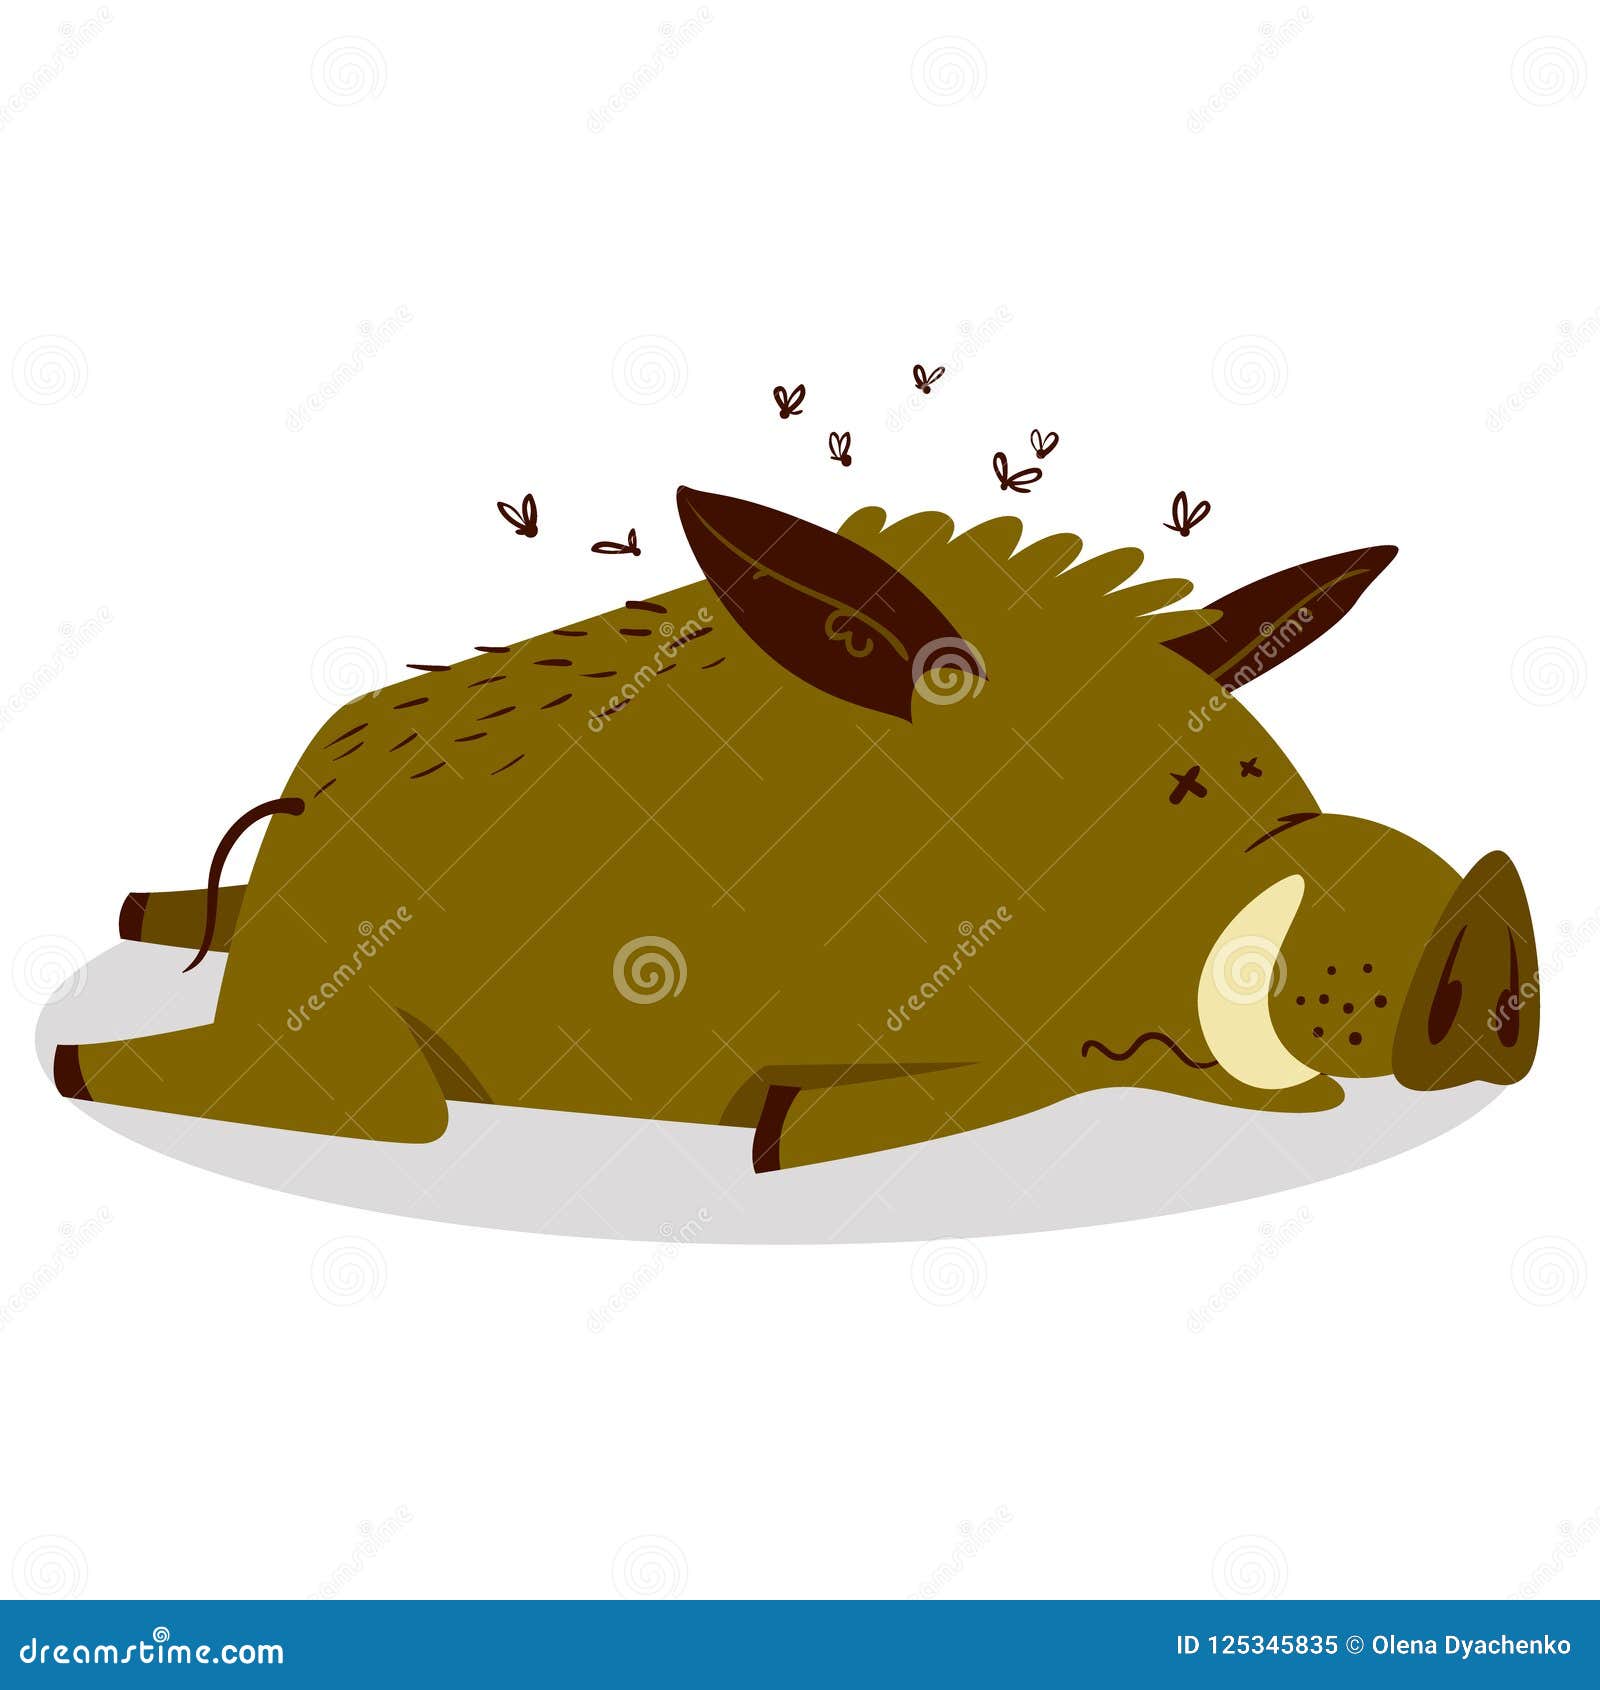 cute-boars-warthog-character-vector-illu